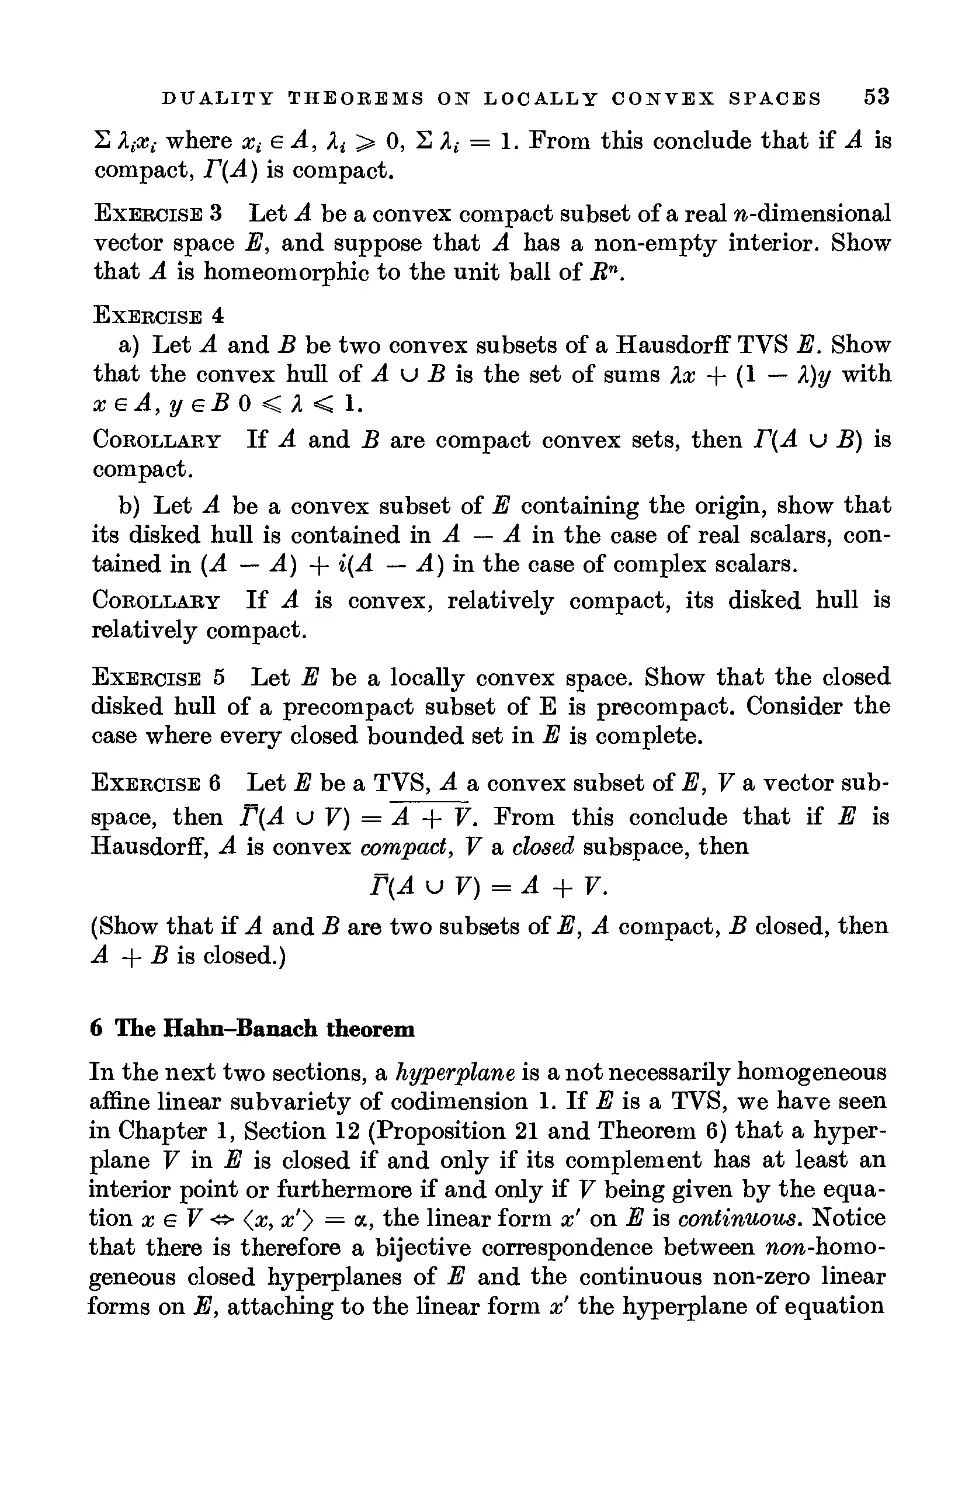 6. The Hahn-Banach theorem